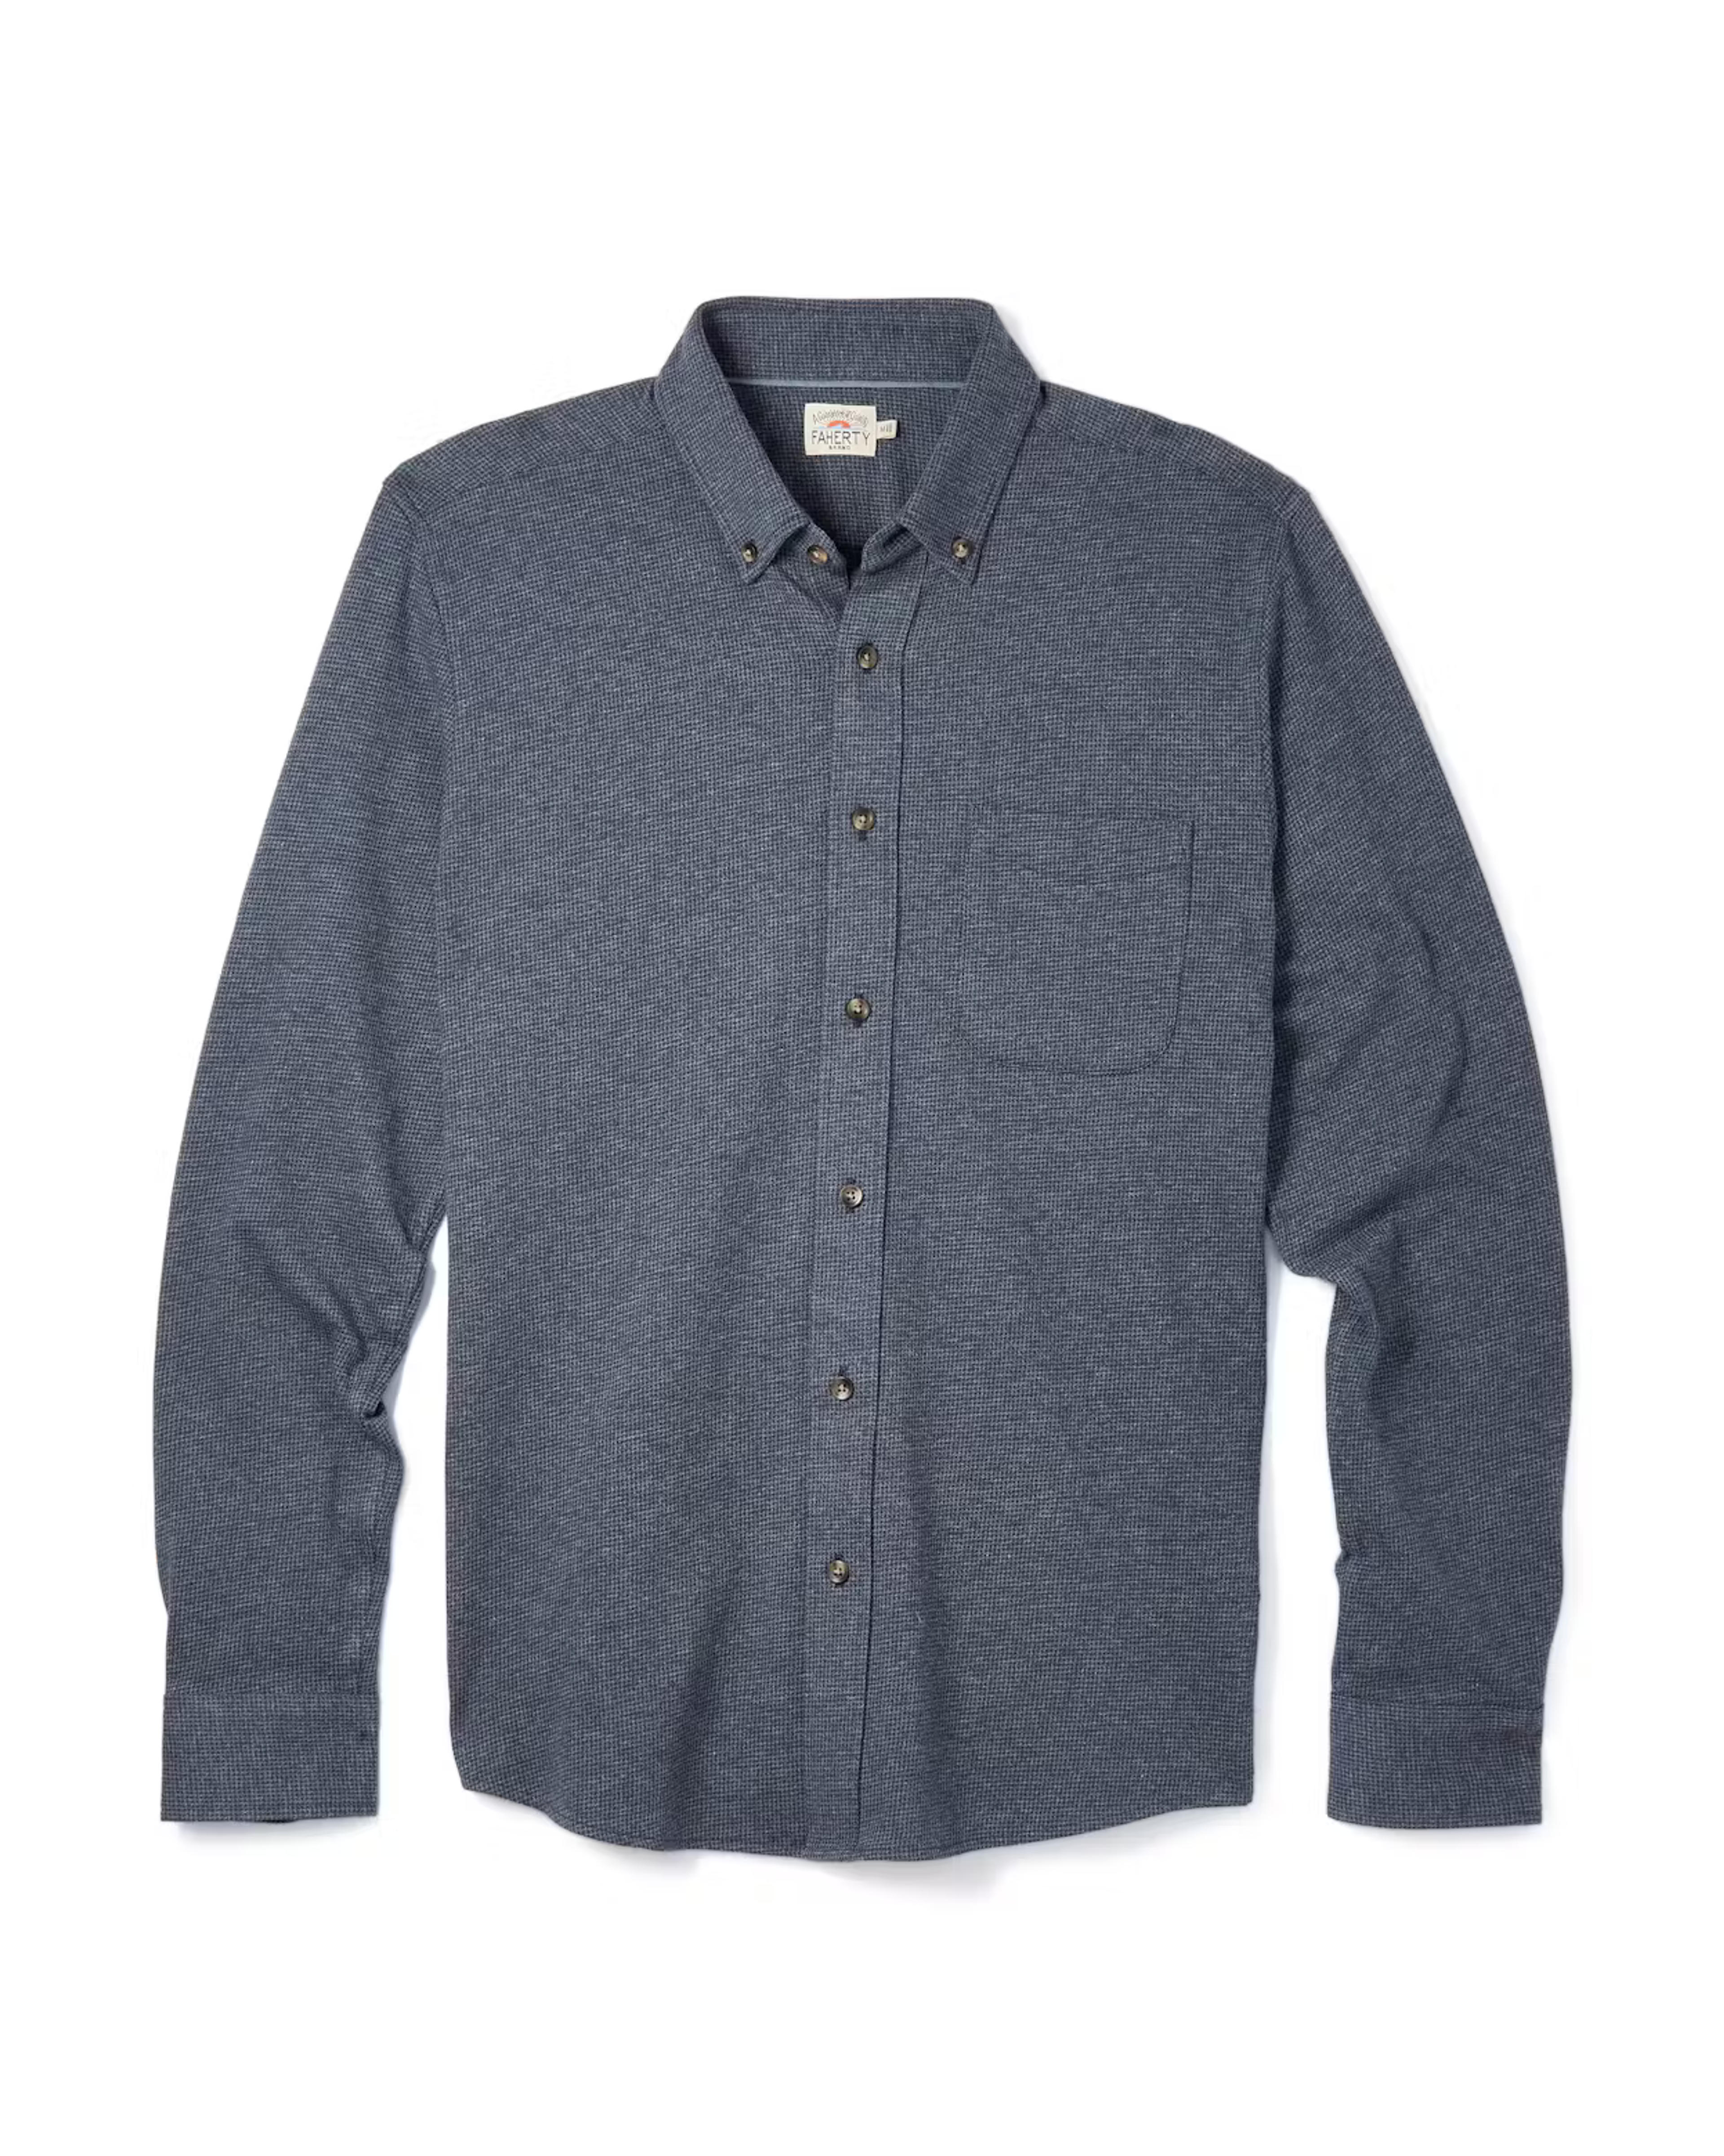 Faherty Brand Houndstooth Knit Shirt - Navy | Long Sleeve Shirts | Huckberry